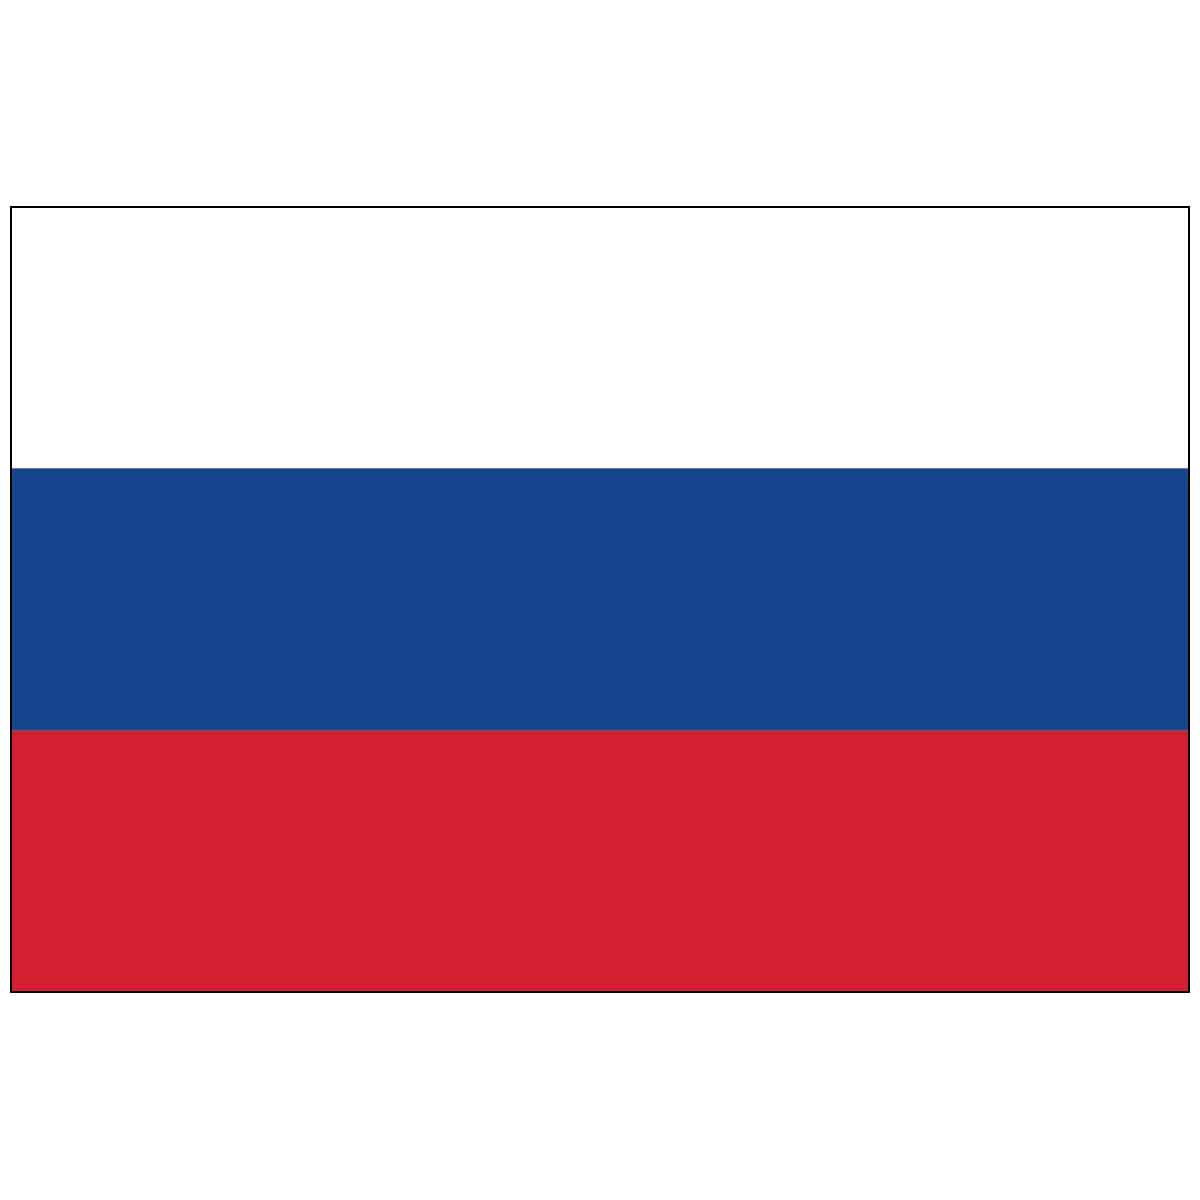 3' x 5' Russian Federation (UN) World Flag